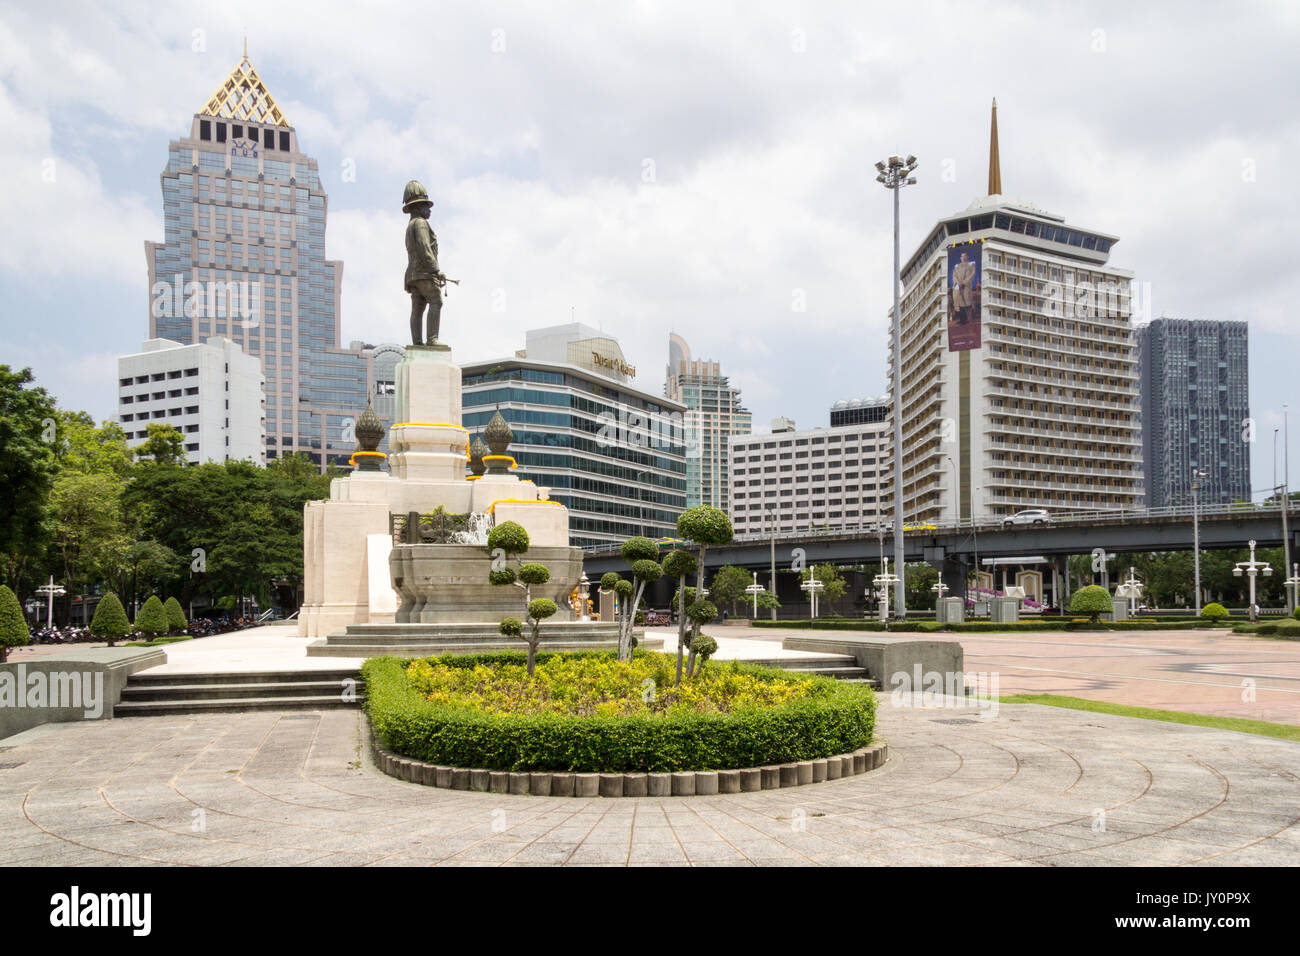 Statue of King Rama VI outside Lumphini Park with the Dusit Thai hotel on the right, Bangkok, Thailand Stock Photo